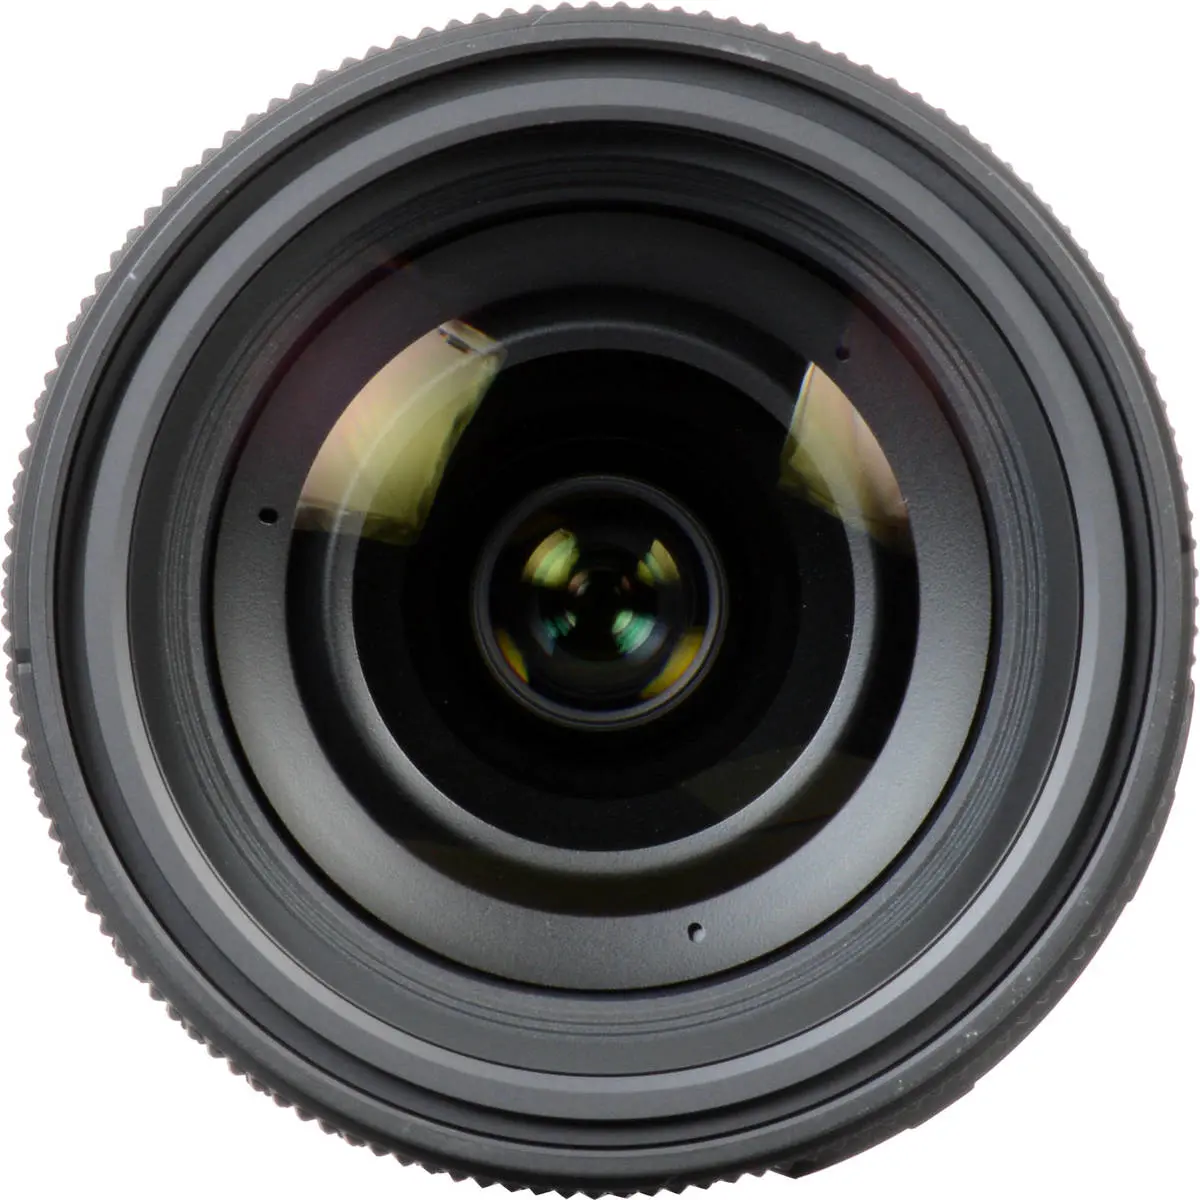 Sigma 24-70mm F2.8 DG OS HSM Art for Canon EF Mount Lens - Lenses